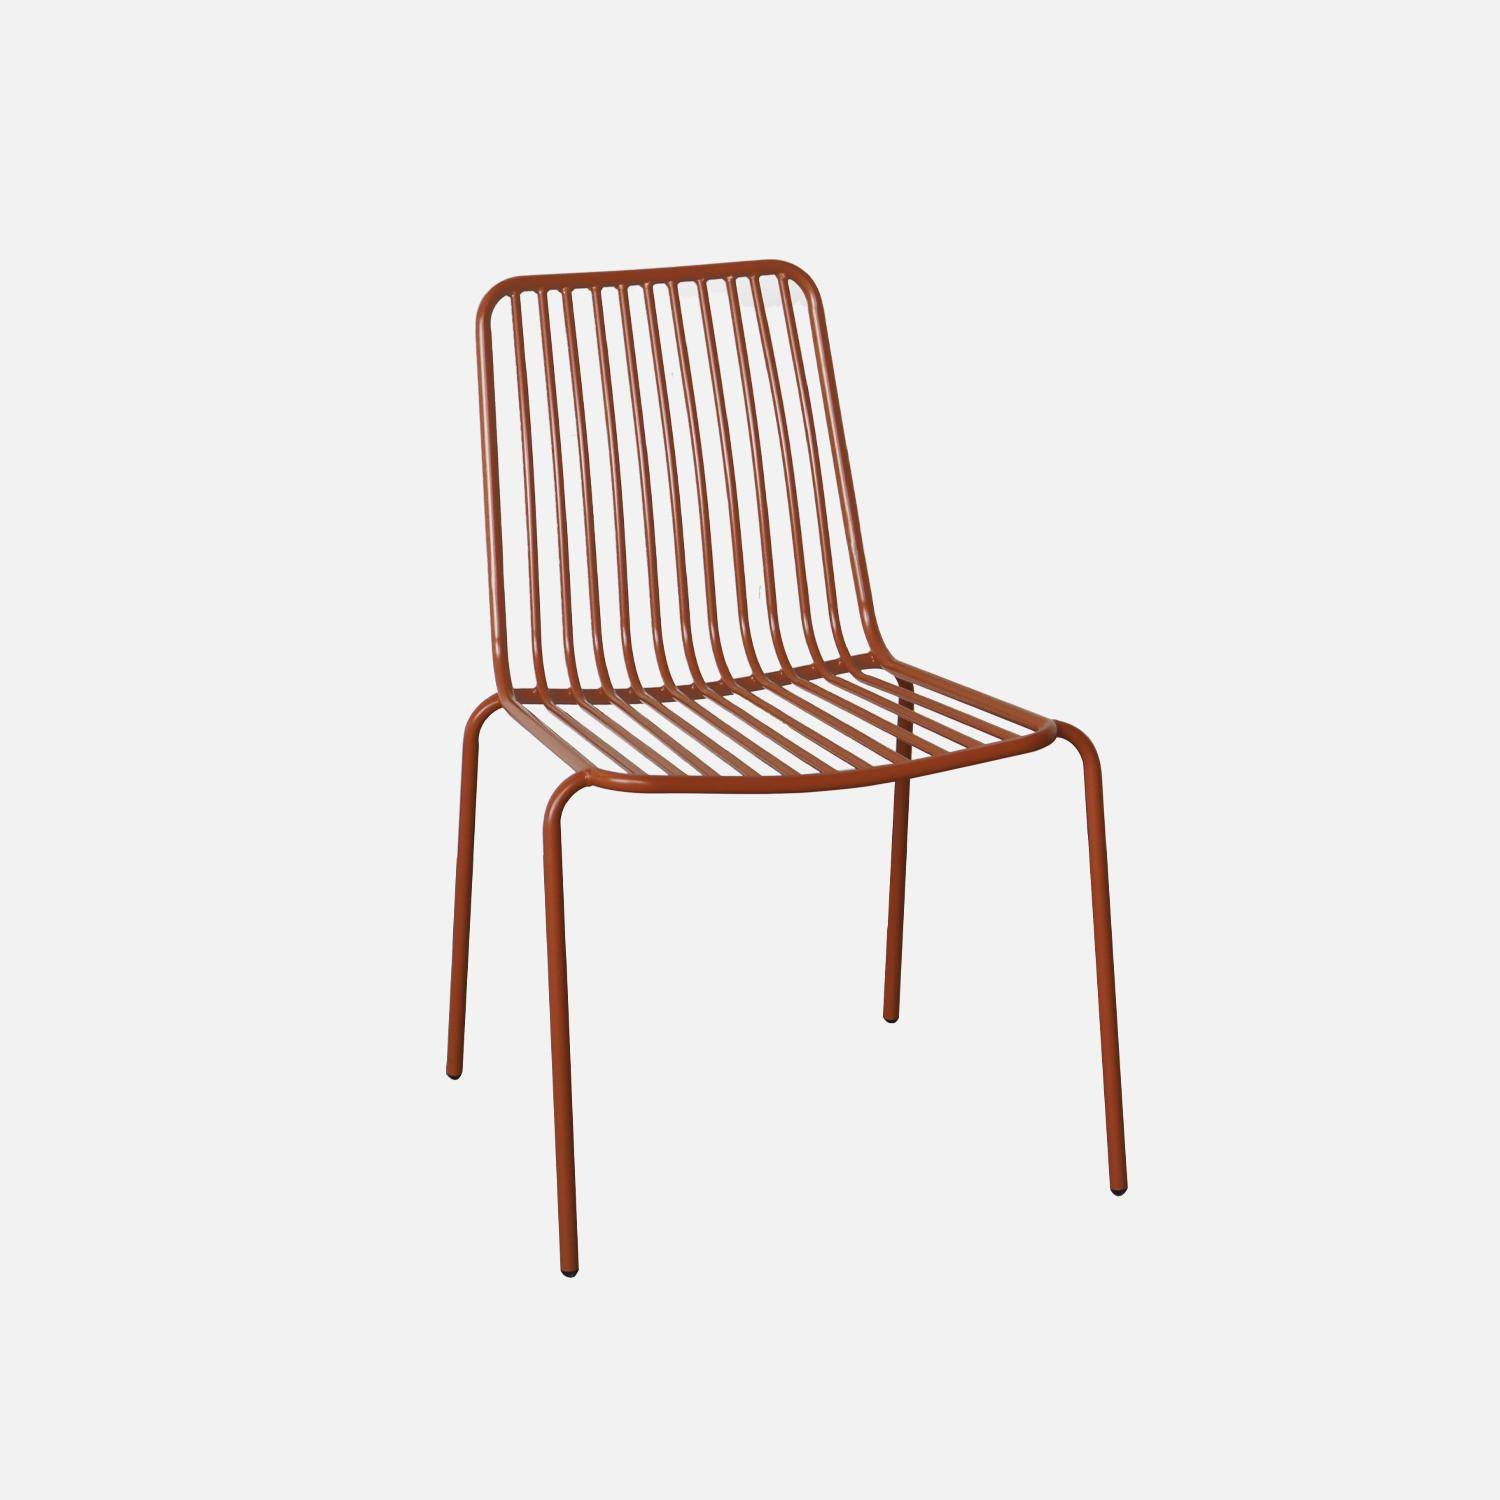 Juego de 2 sillas de jardín de acero terracota, apilables, diseño lineal,sweeek,Photo2